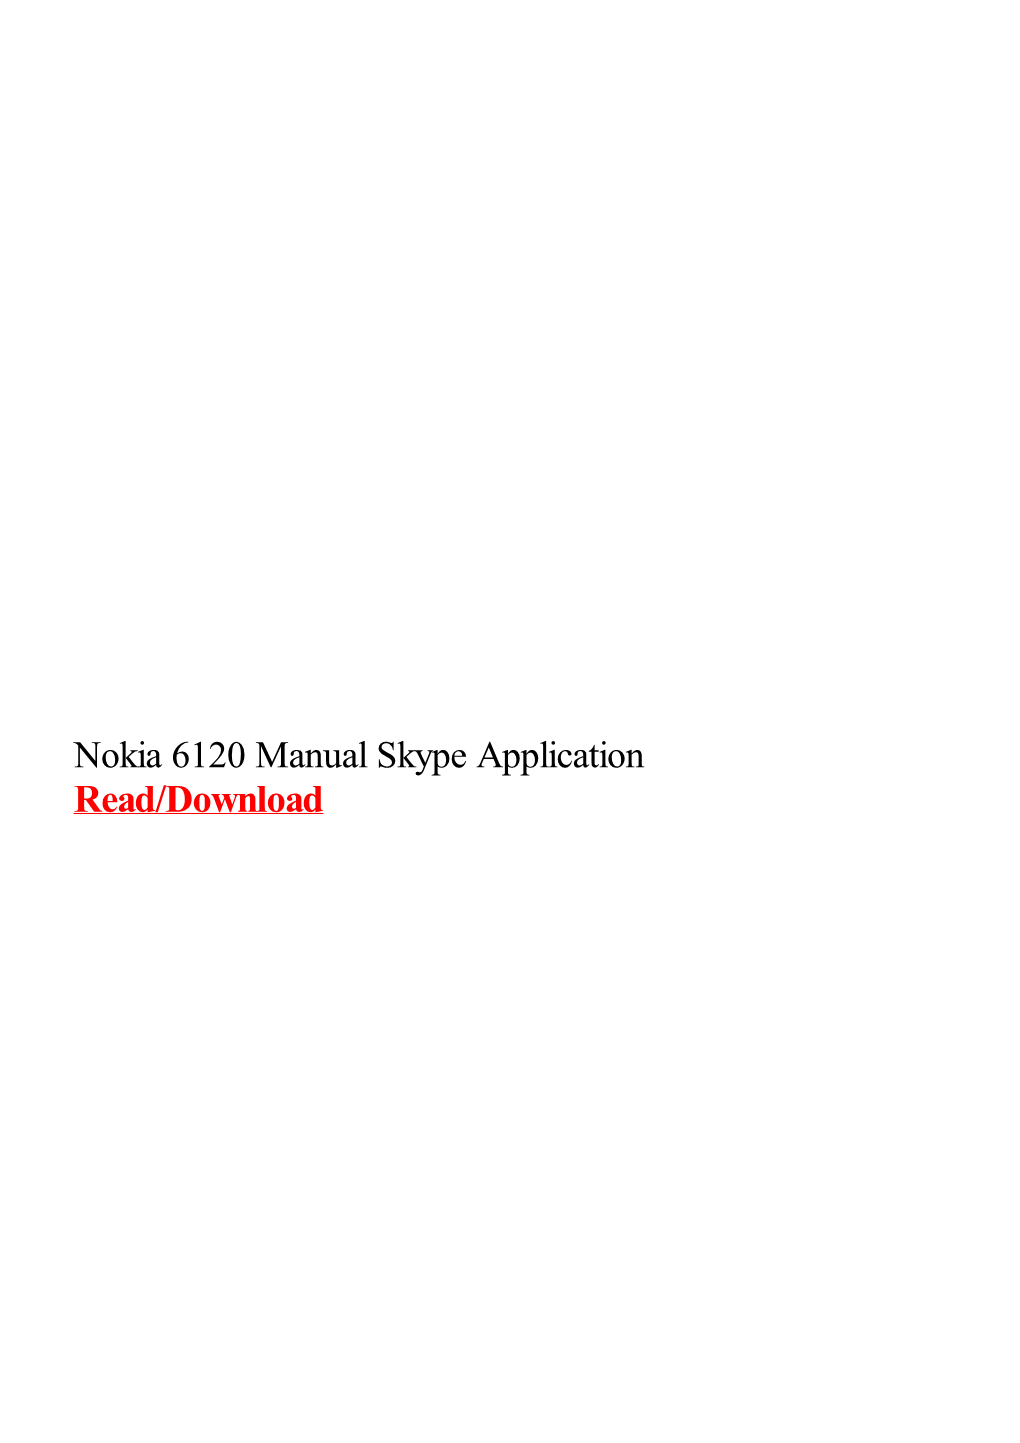 Nokia 6120 Manual Skype Application